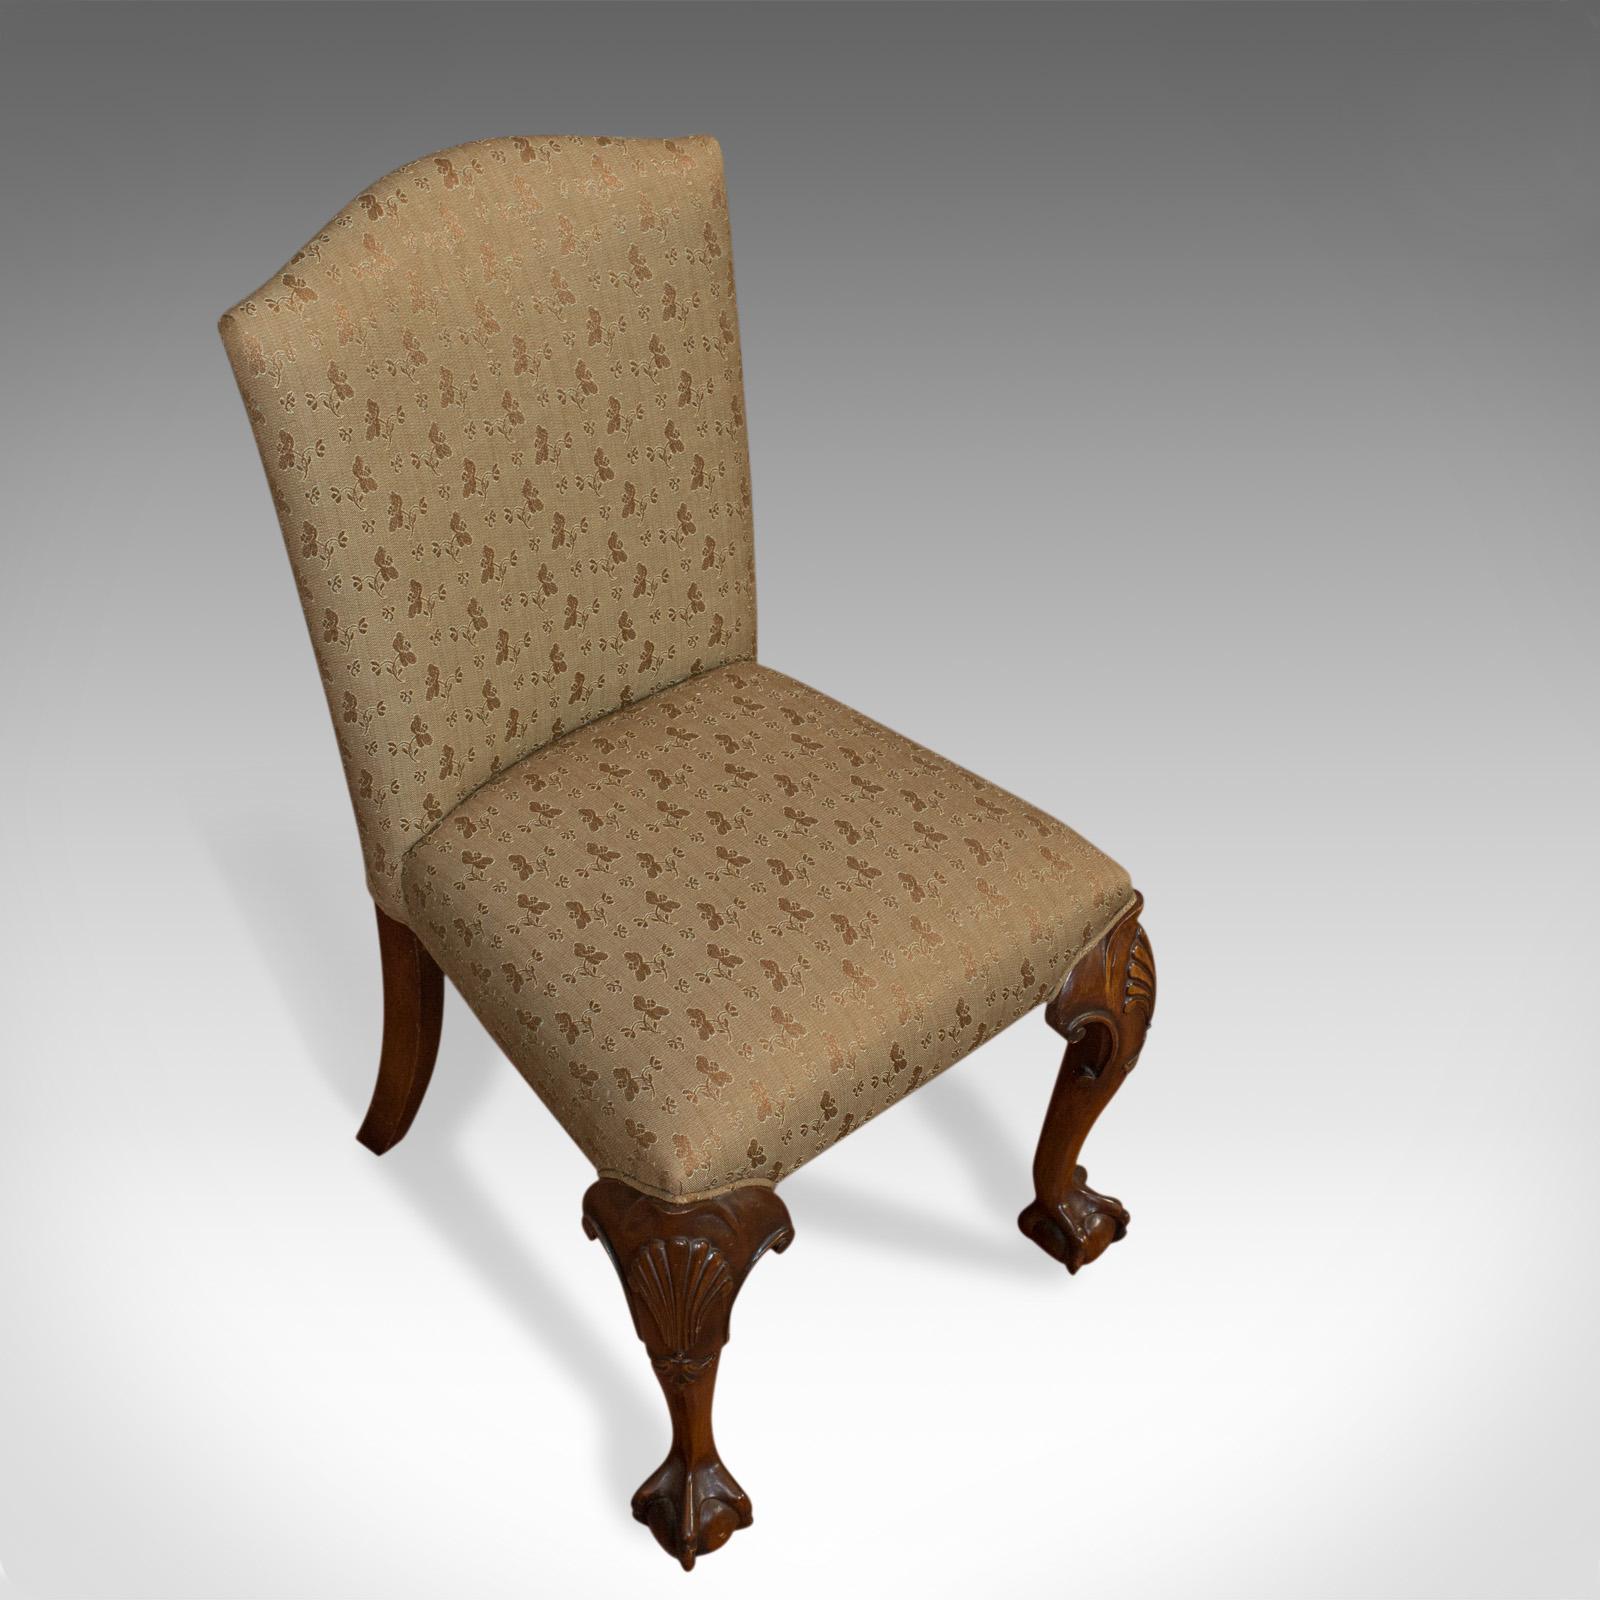 20th Century Vintage Side Chair, English, Mahogany, Georgian Revival, Drawing Room